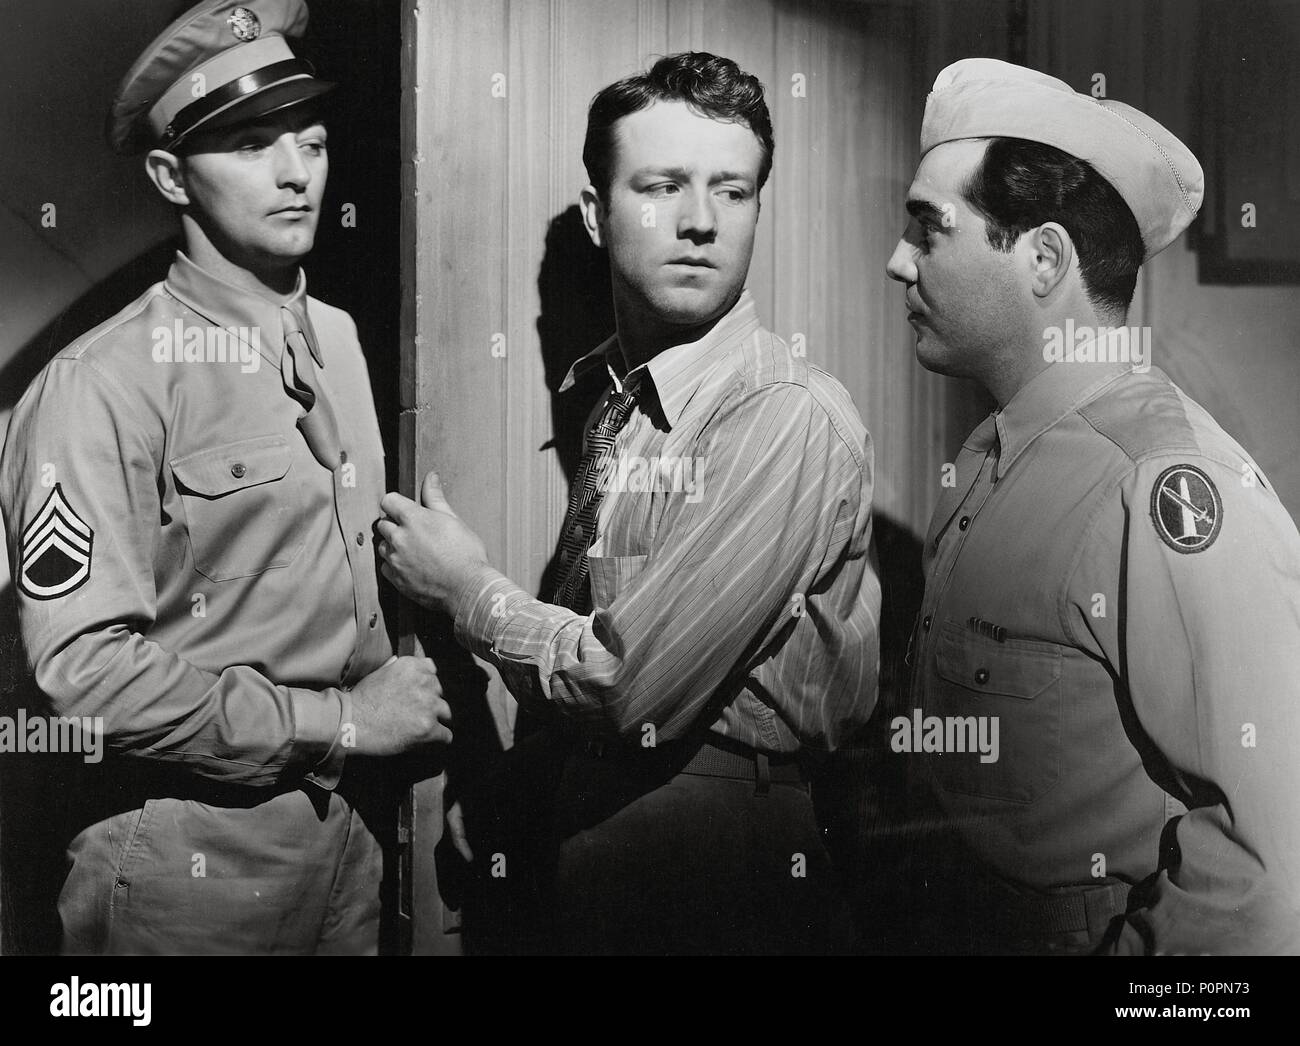 Original Film Title: CROSSFIRE. English Title: CROSSFIRE. Film Director:  EDWARD DMYTRYK. Year: 1947. Stars: ROBERT MITCHUM. Credit: RKO / Album  Stock Photo - Alamy